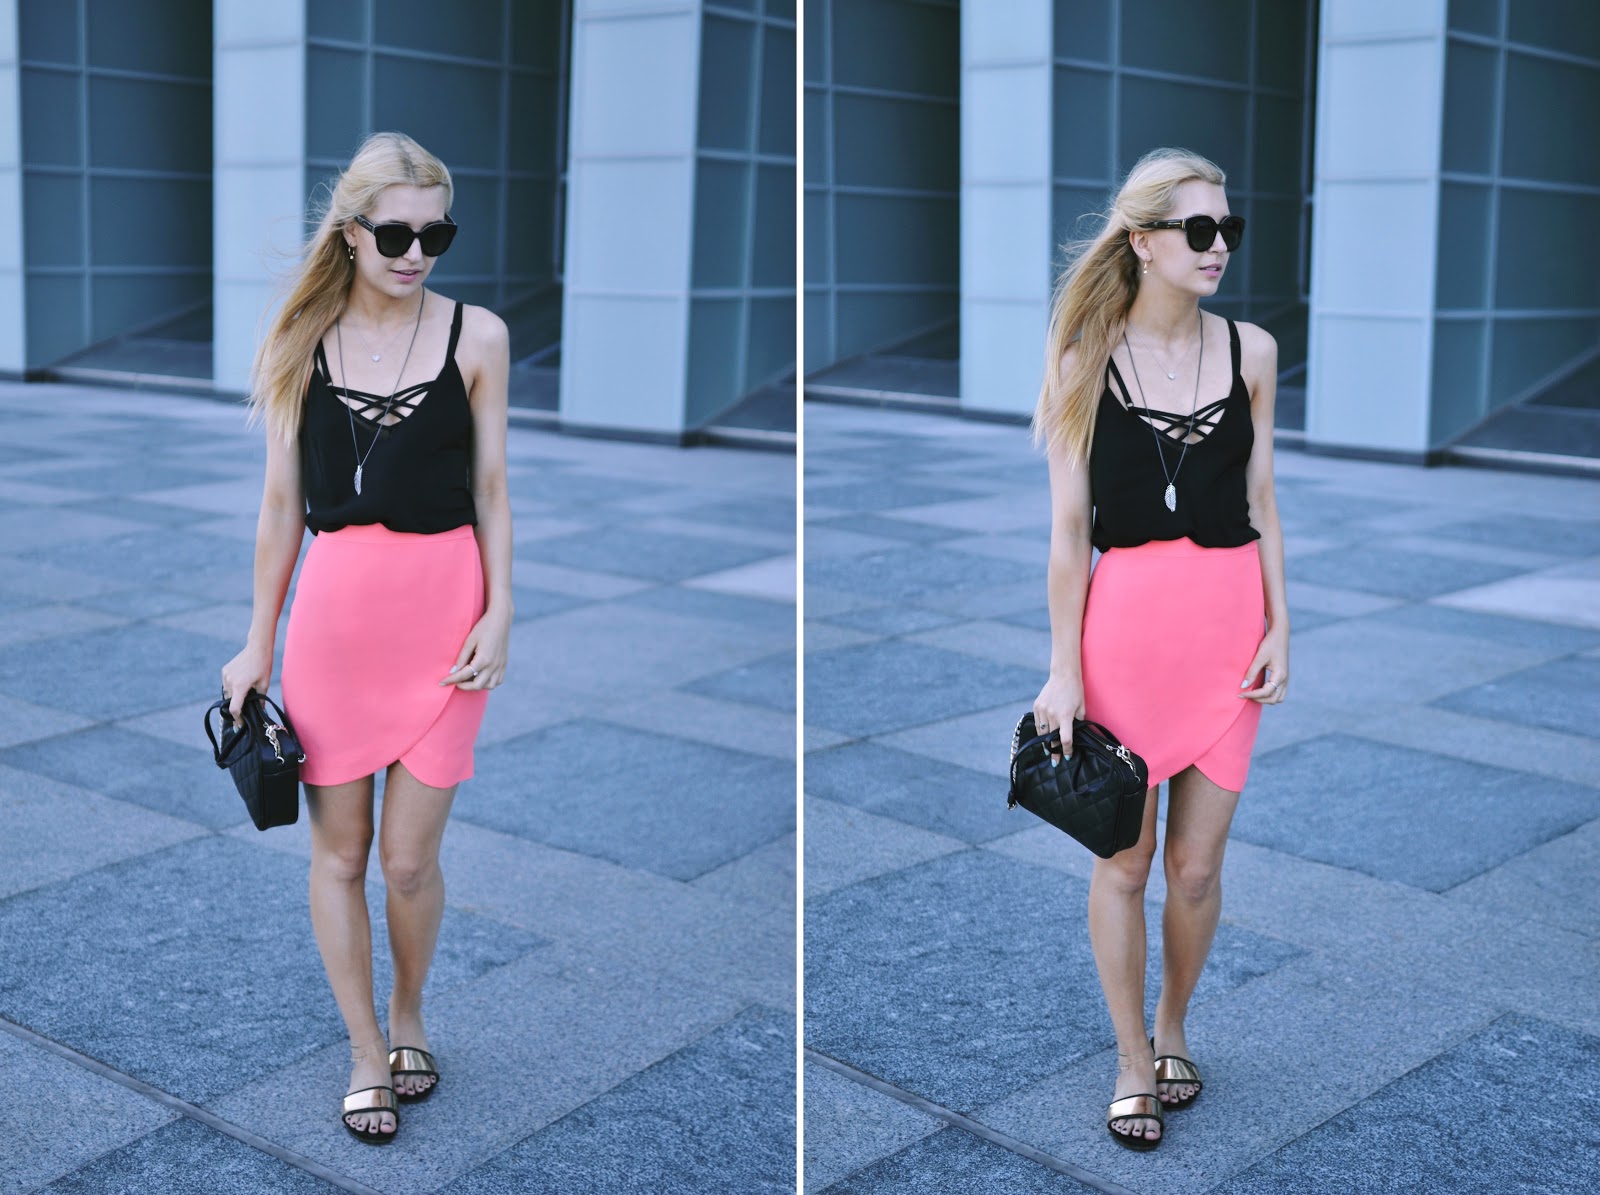 Latvian fashion blogger